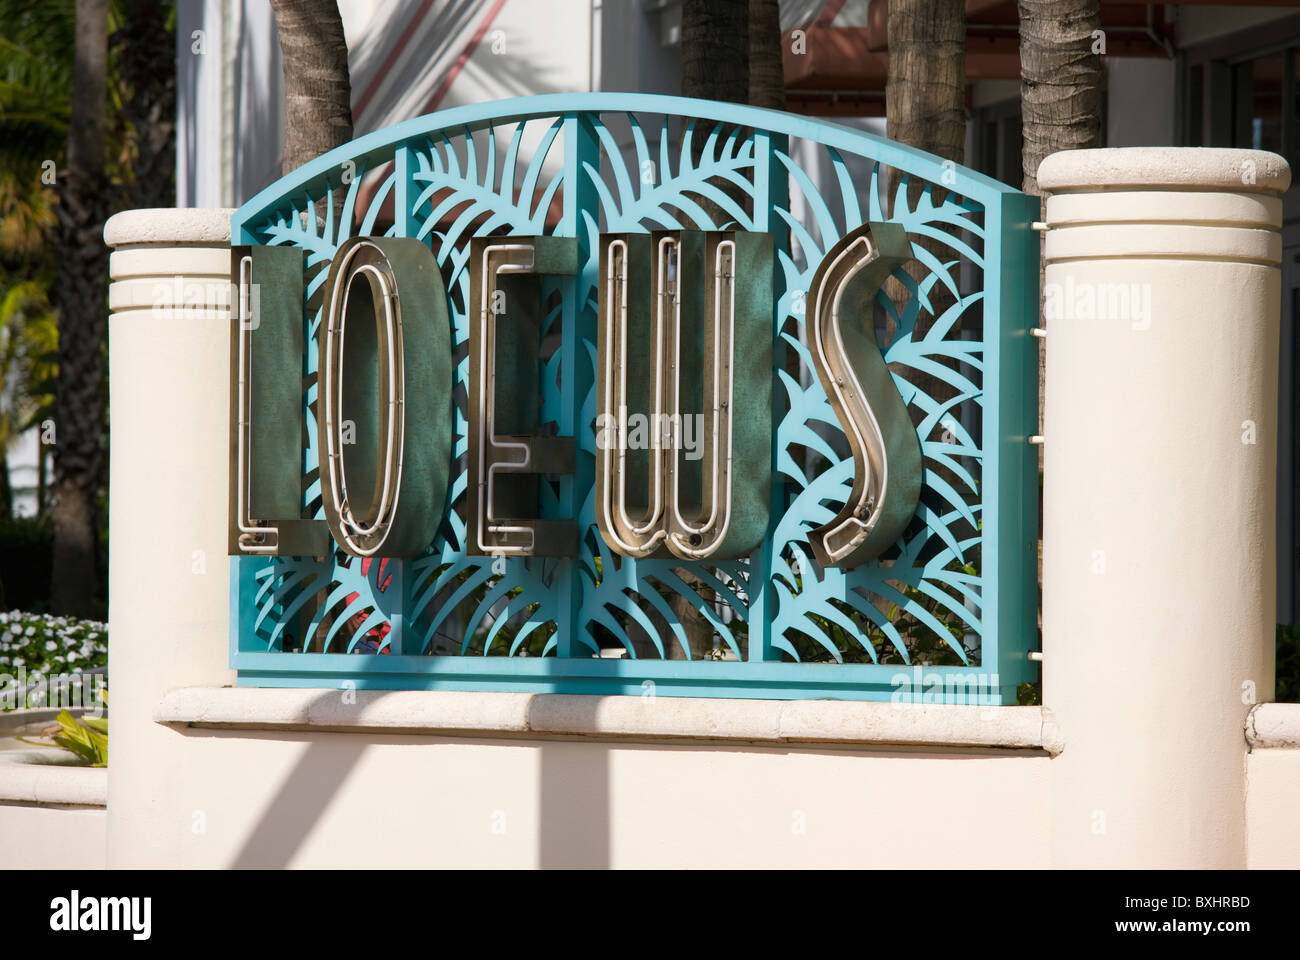 Art deco architecture entrance to Loews Hotel, Collins Avenue, South Beach, Miami, Florida, United States of America Stock Photo